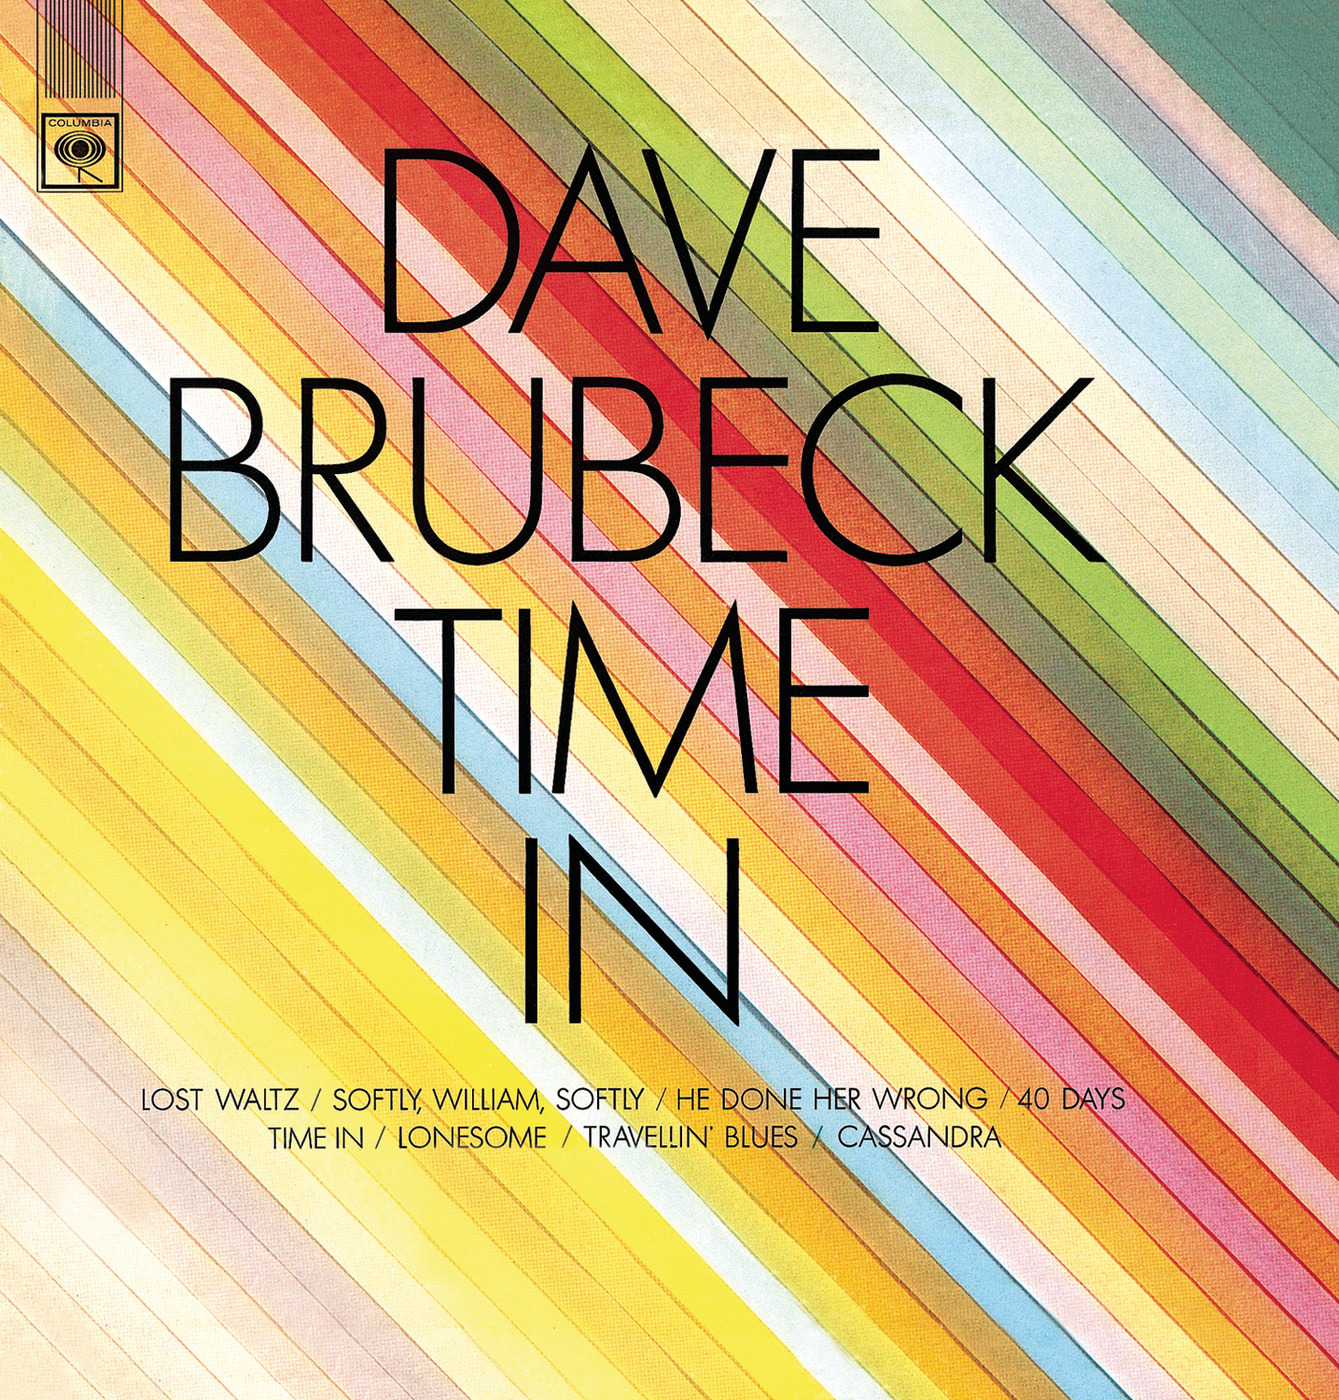 The Dave Brubeck Quartet-Take Five